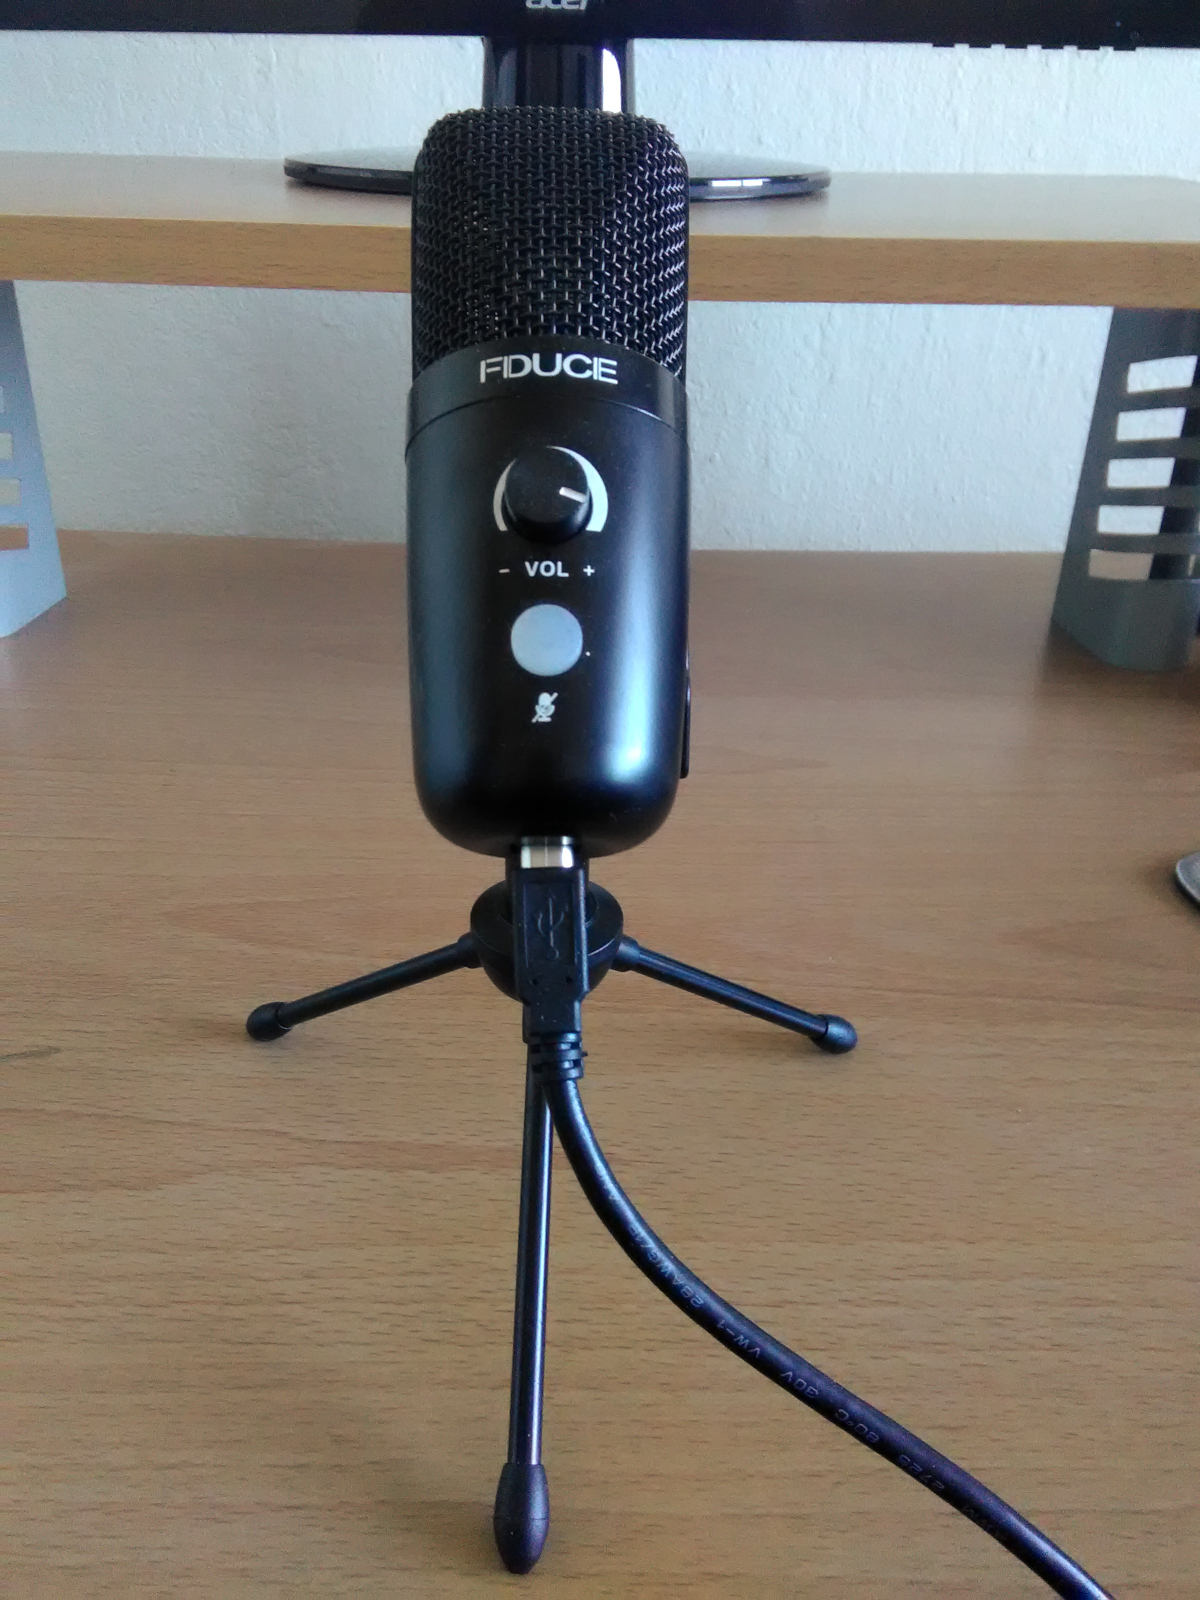 fduce-usb-microphone-with-tripod-jason-g-designs